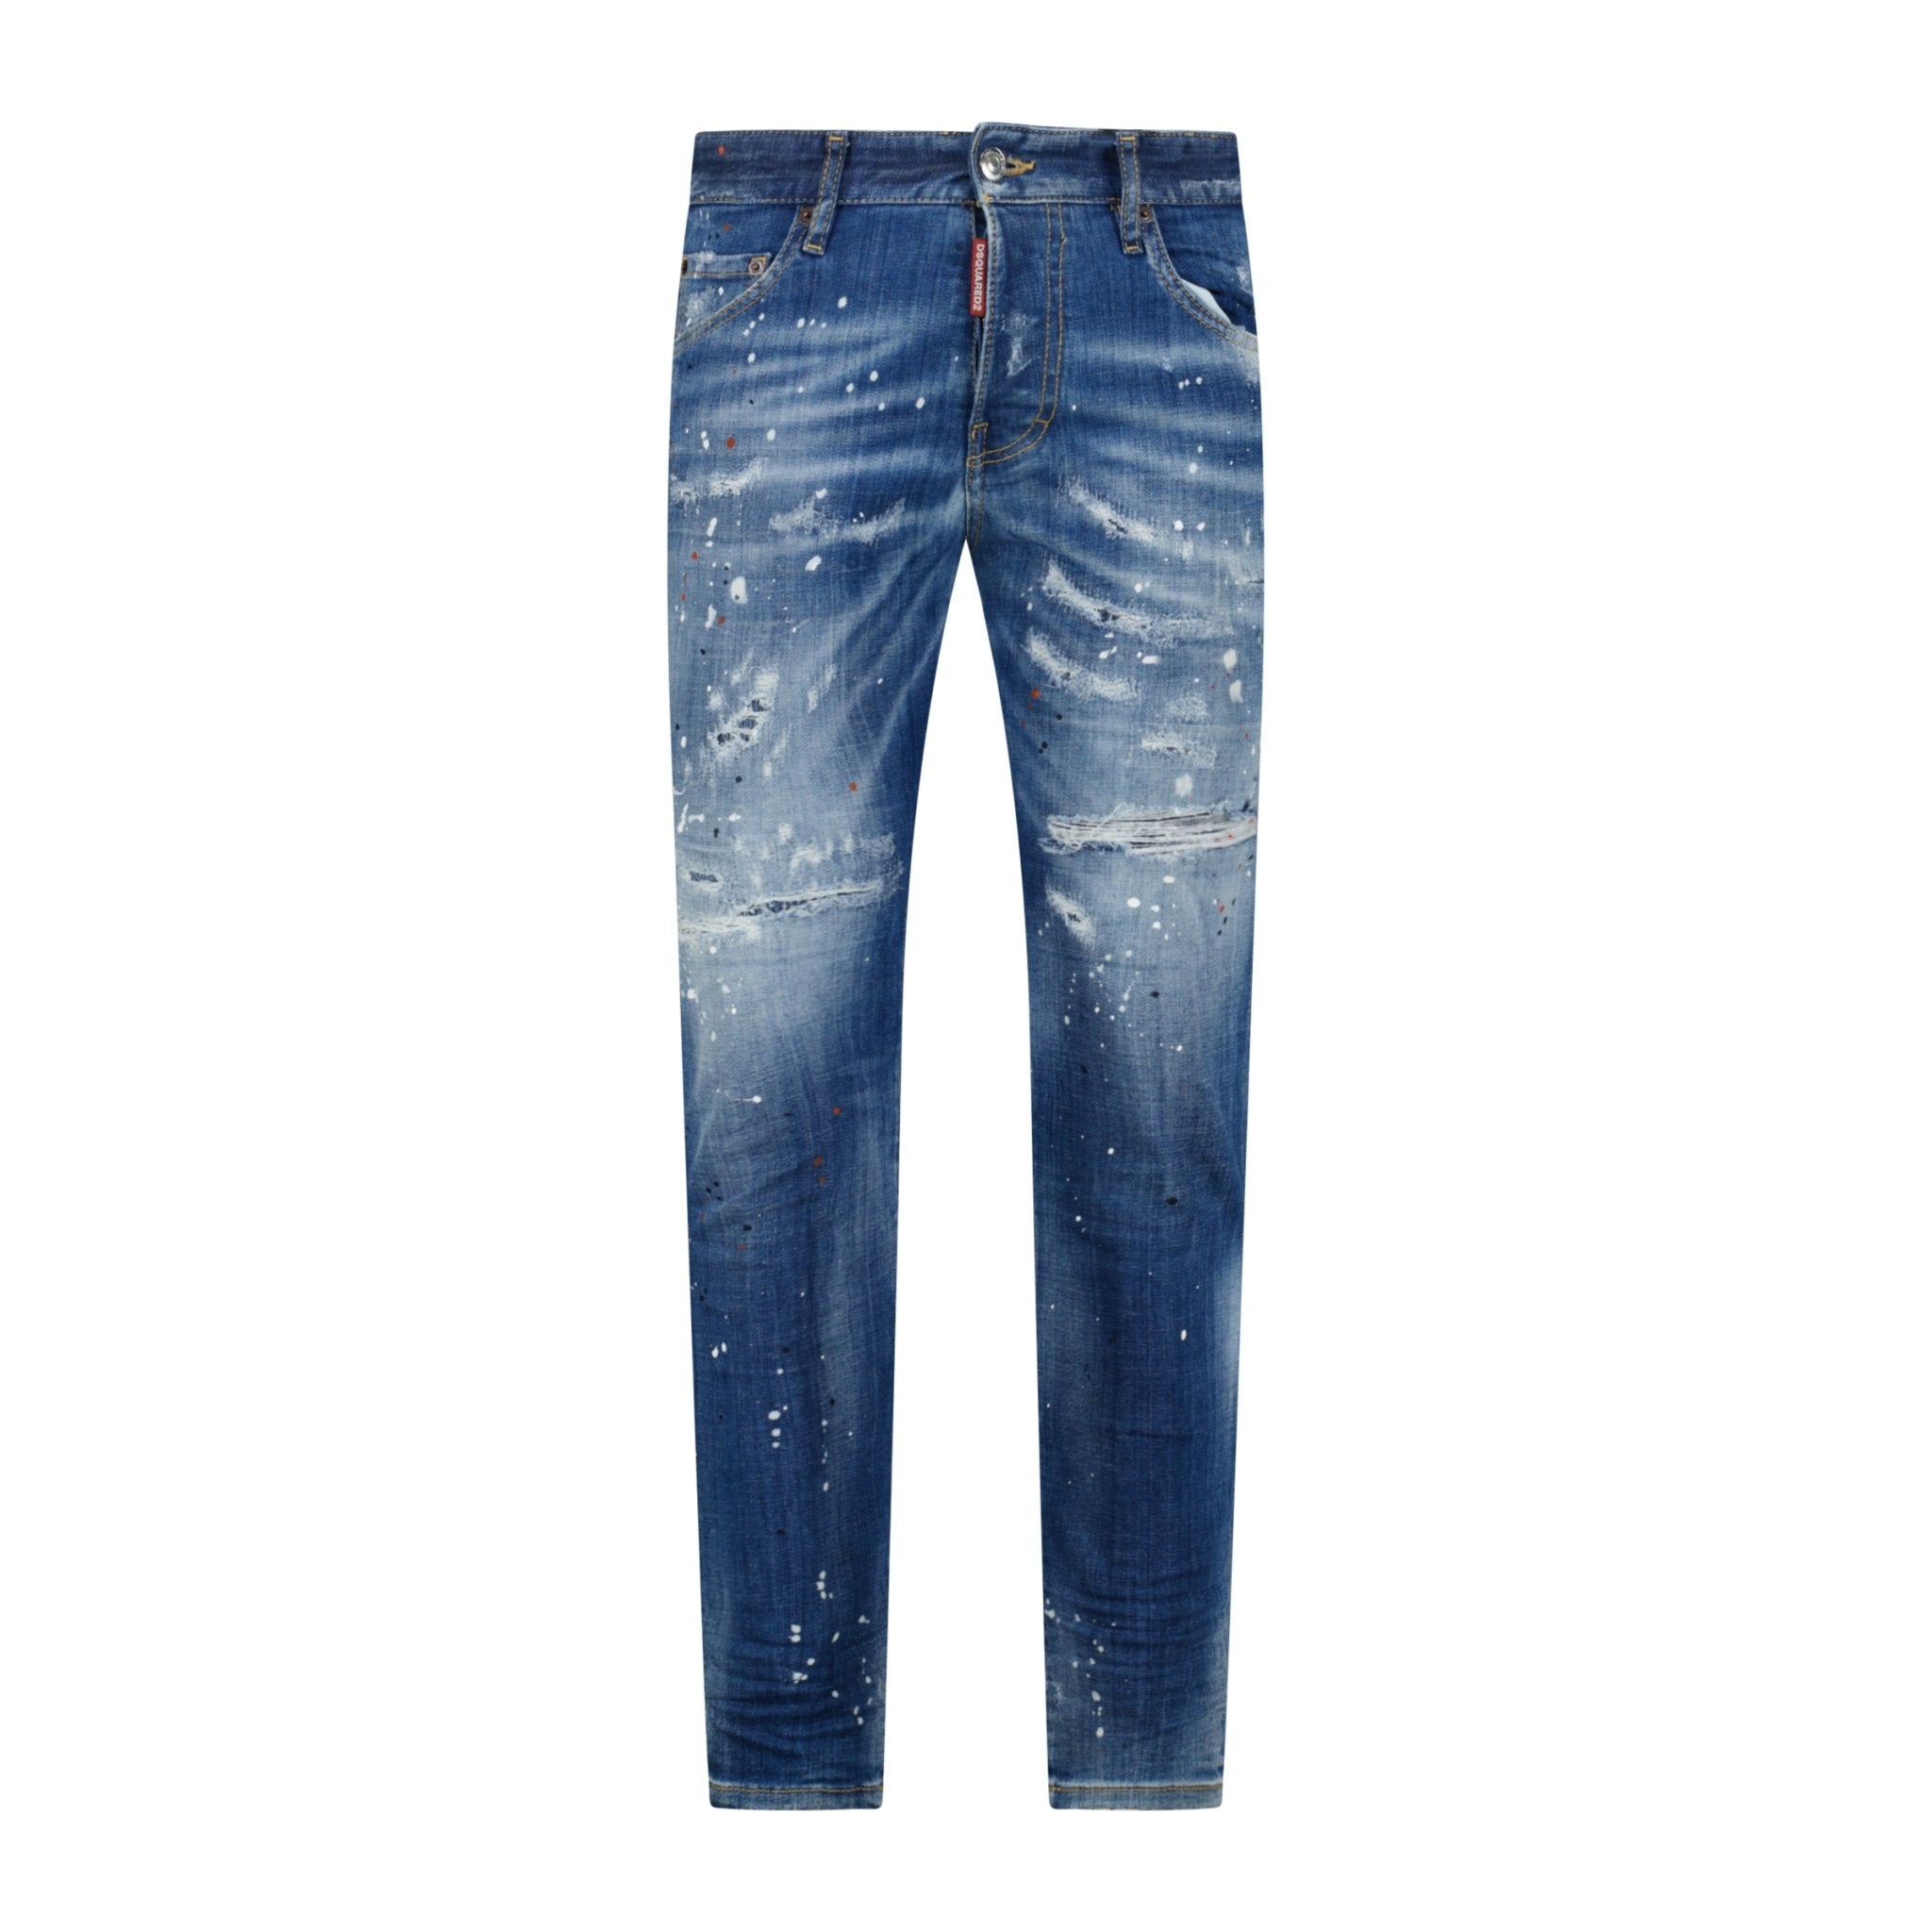 DSquared2 'Skater Jean' Orange & White Paint Splatter Jeans Blue, Boinclo  ltd